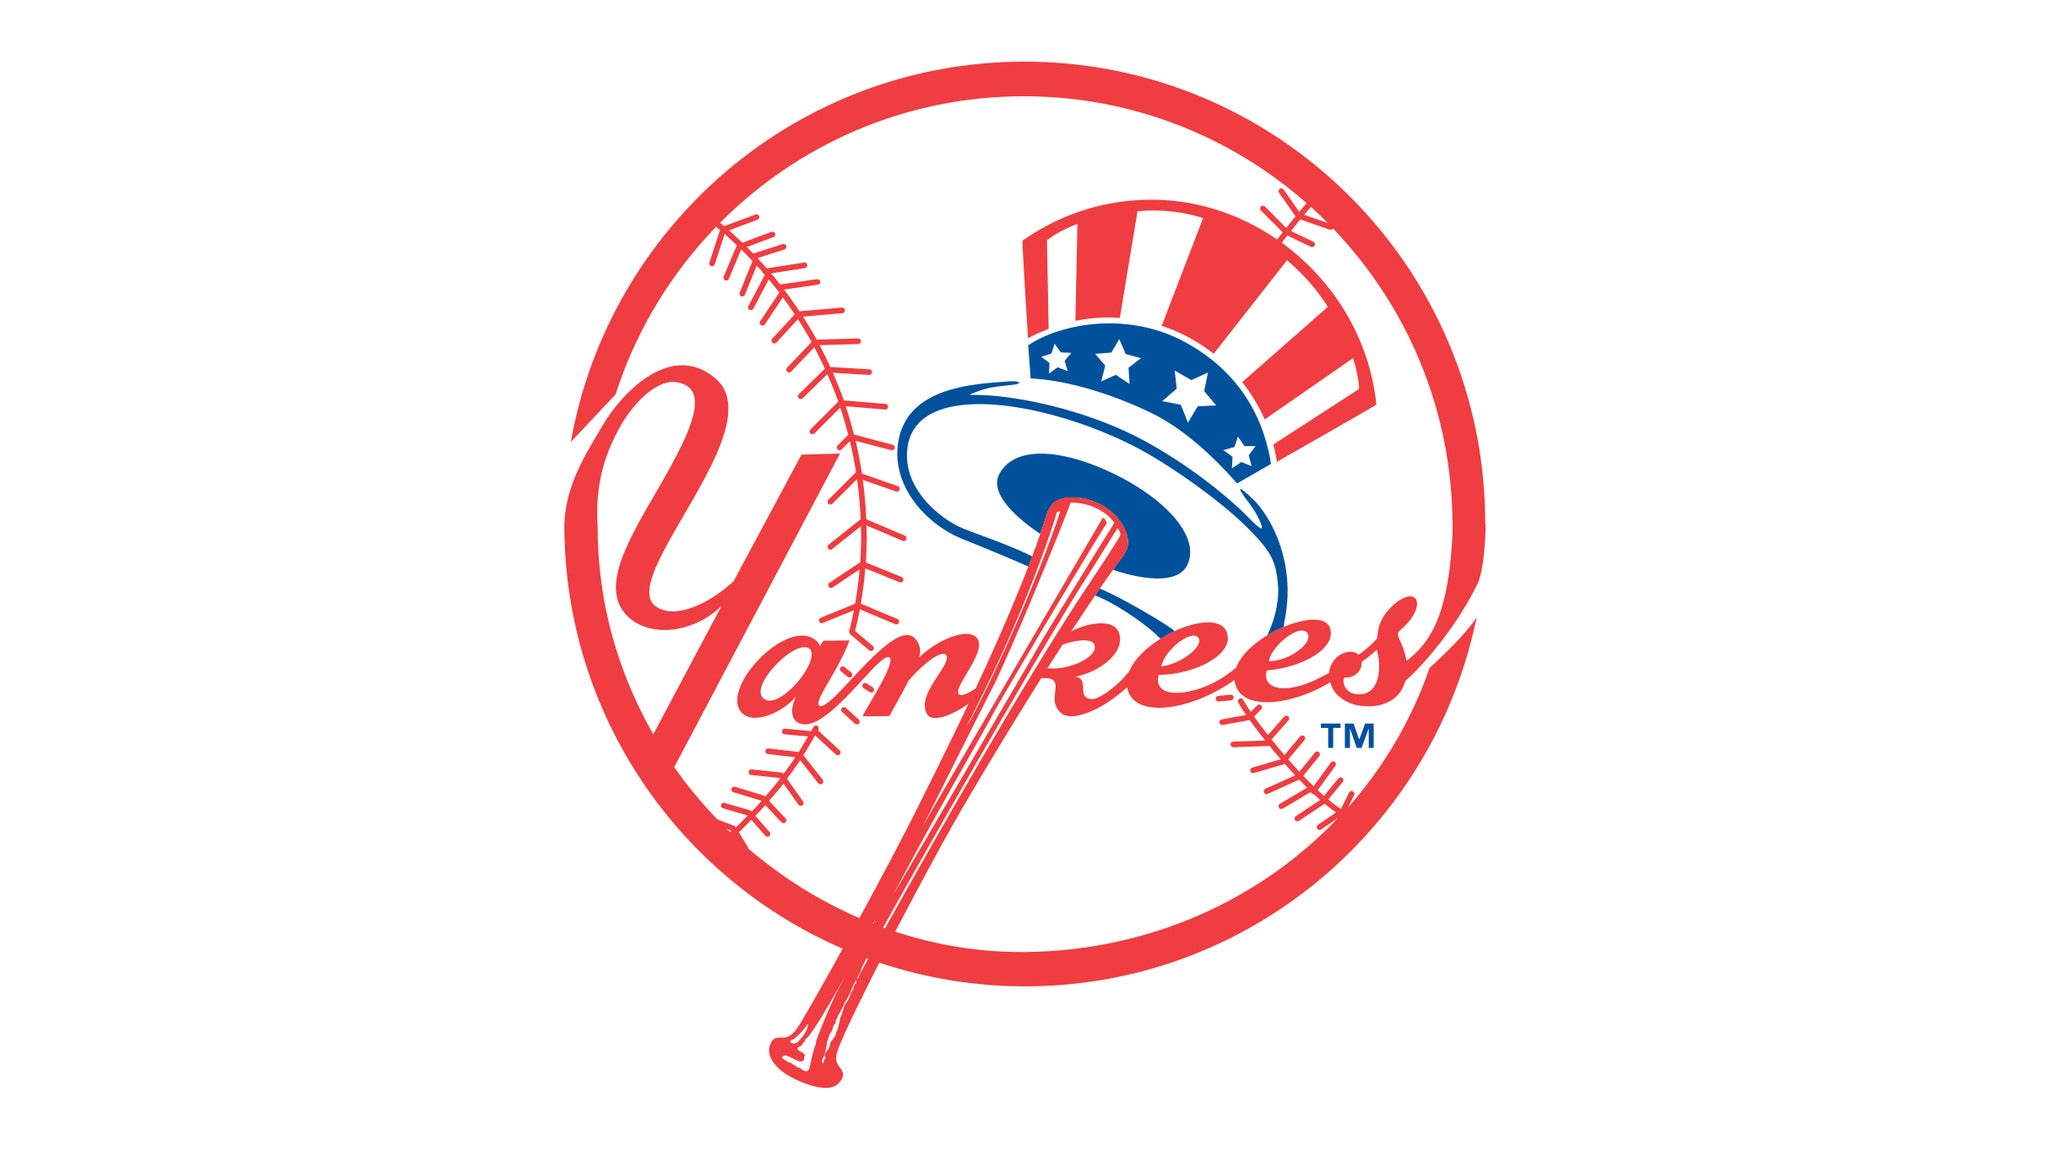 New York Yankees v. Baltimore Orioles * Premium Seating